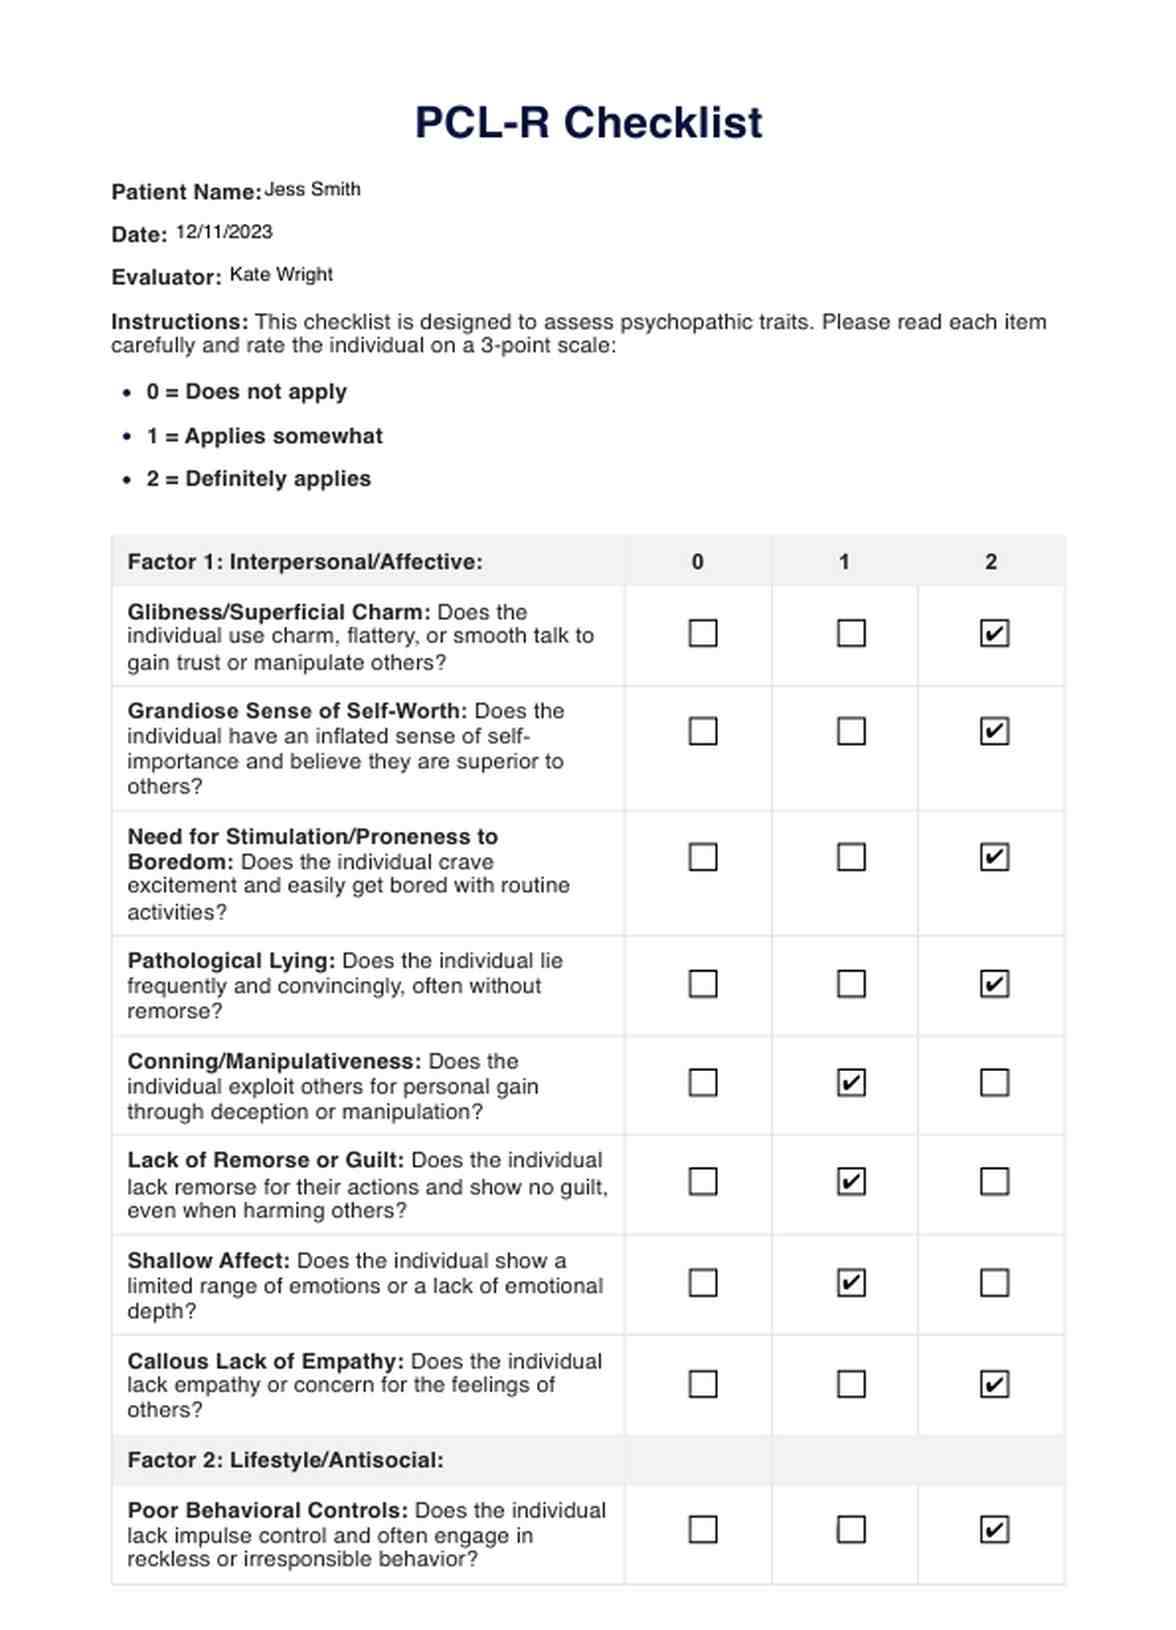 PCL-R Checklist PDF Example